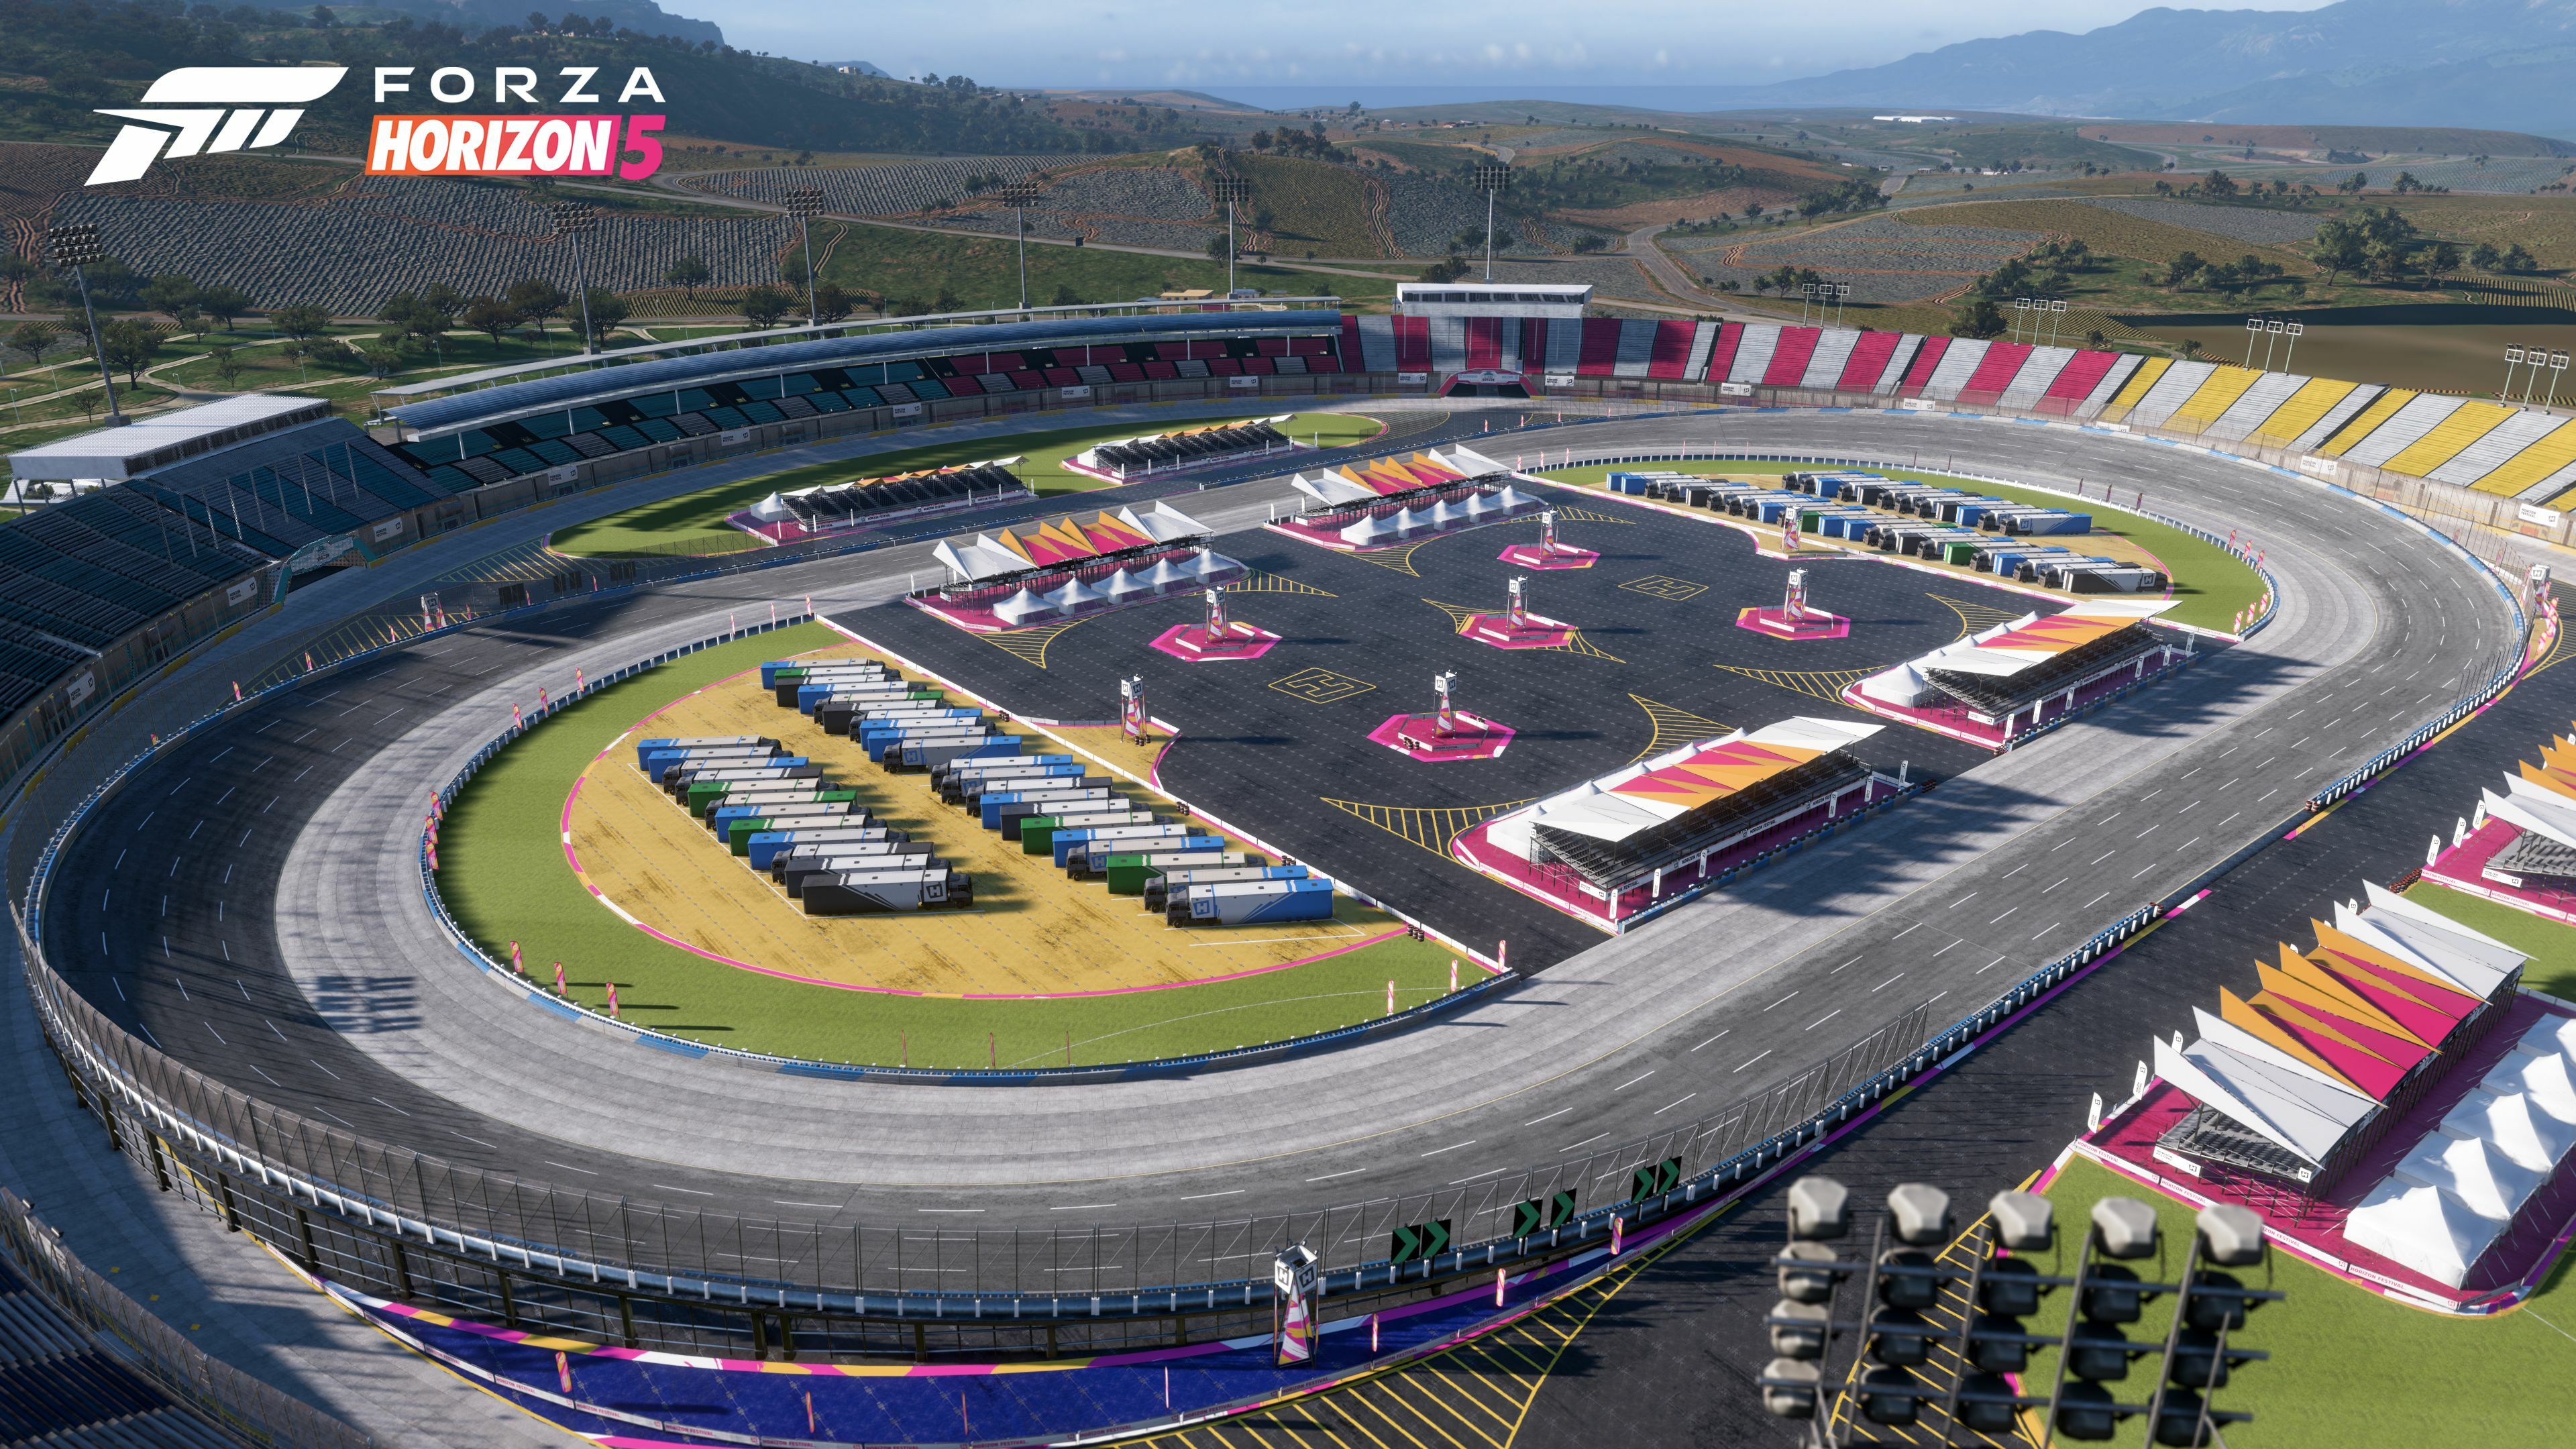 Forza Motorsport Steam profile collectibles - Forza Motorsport